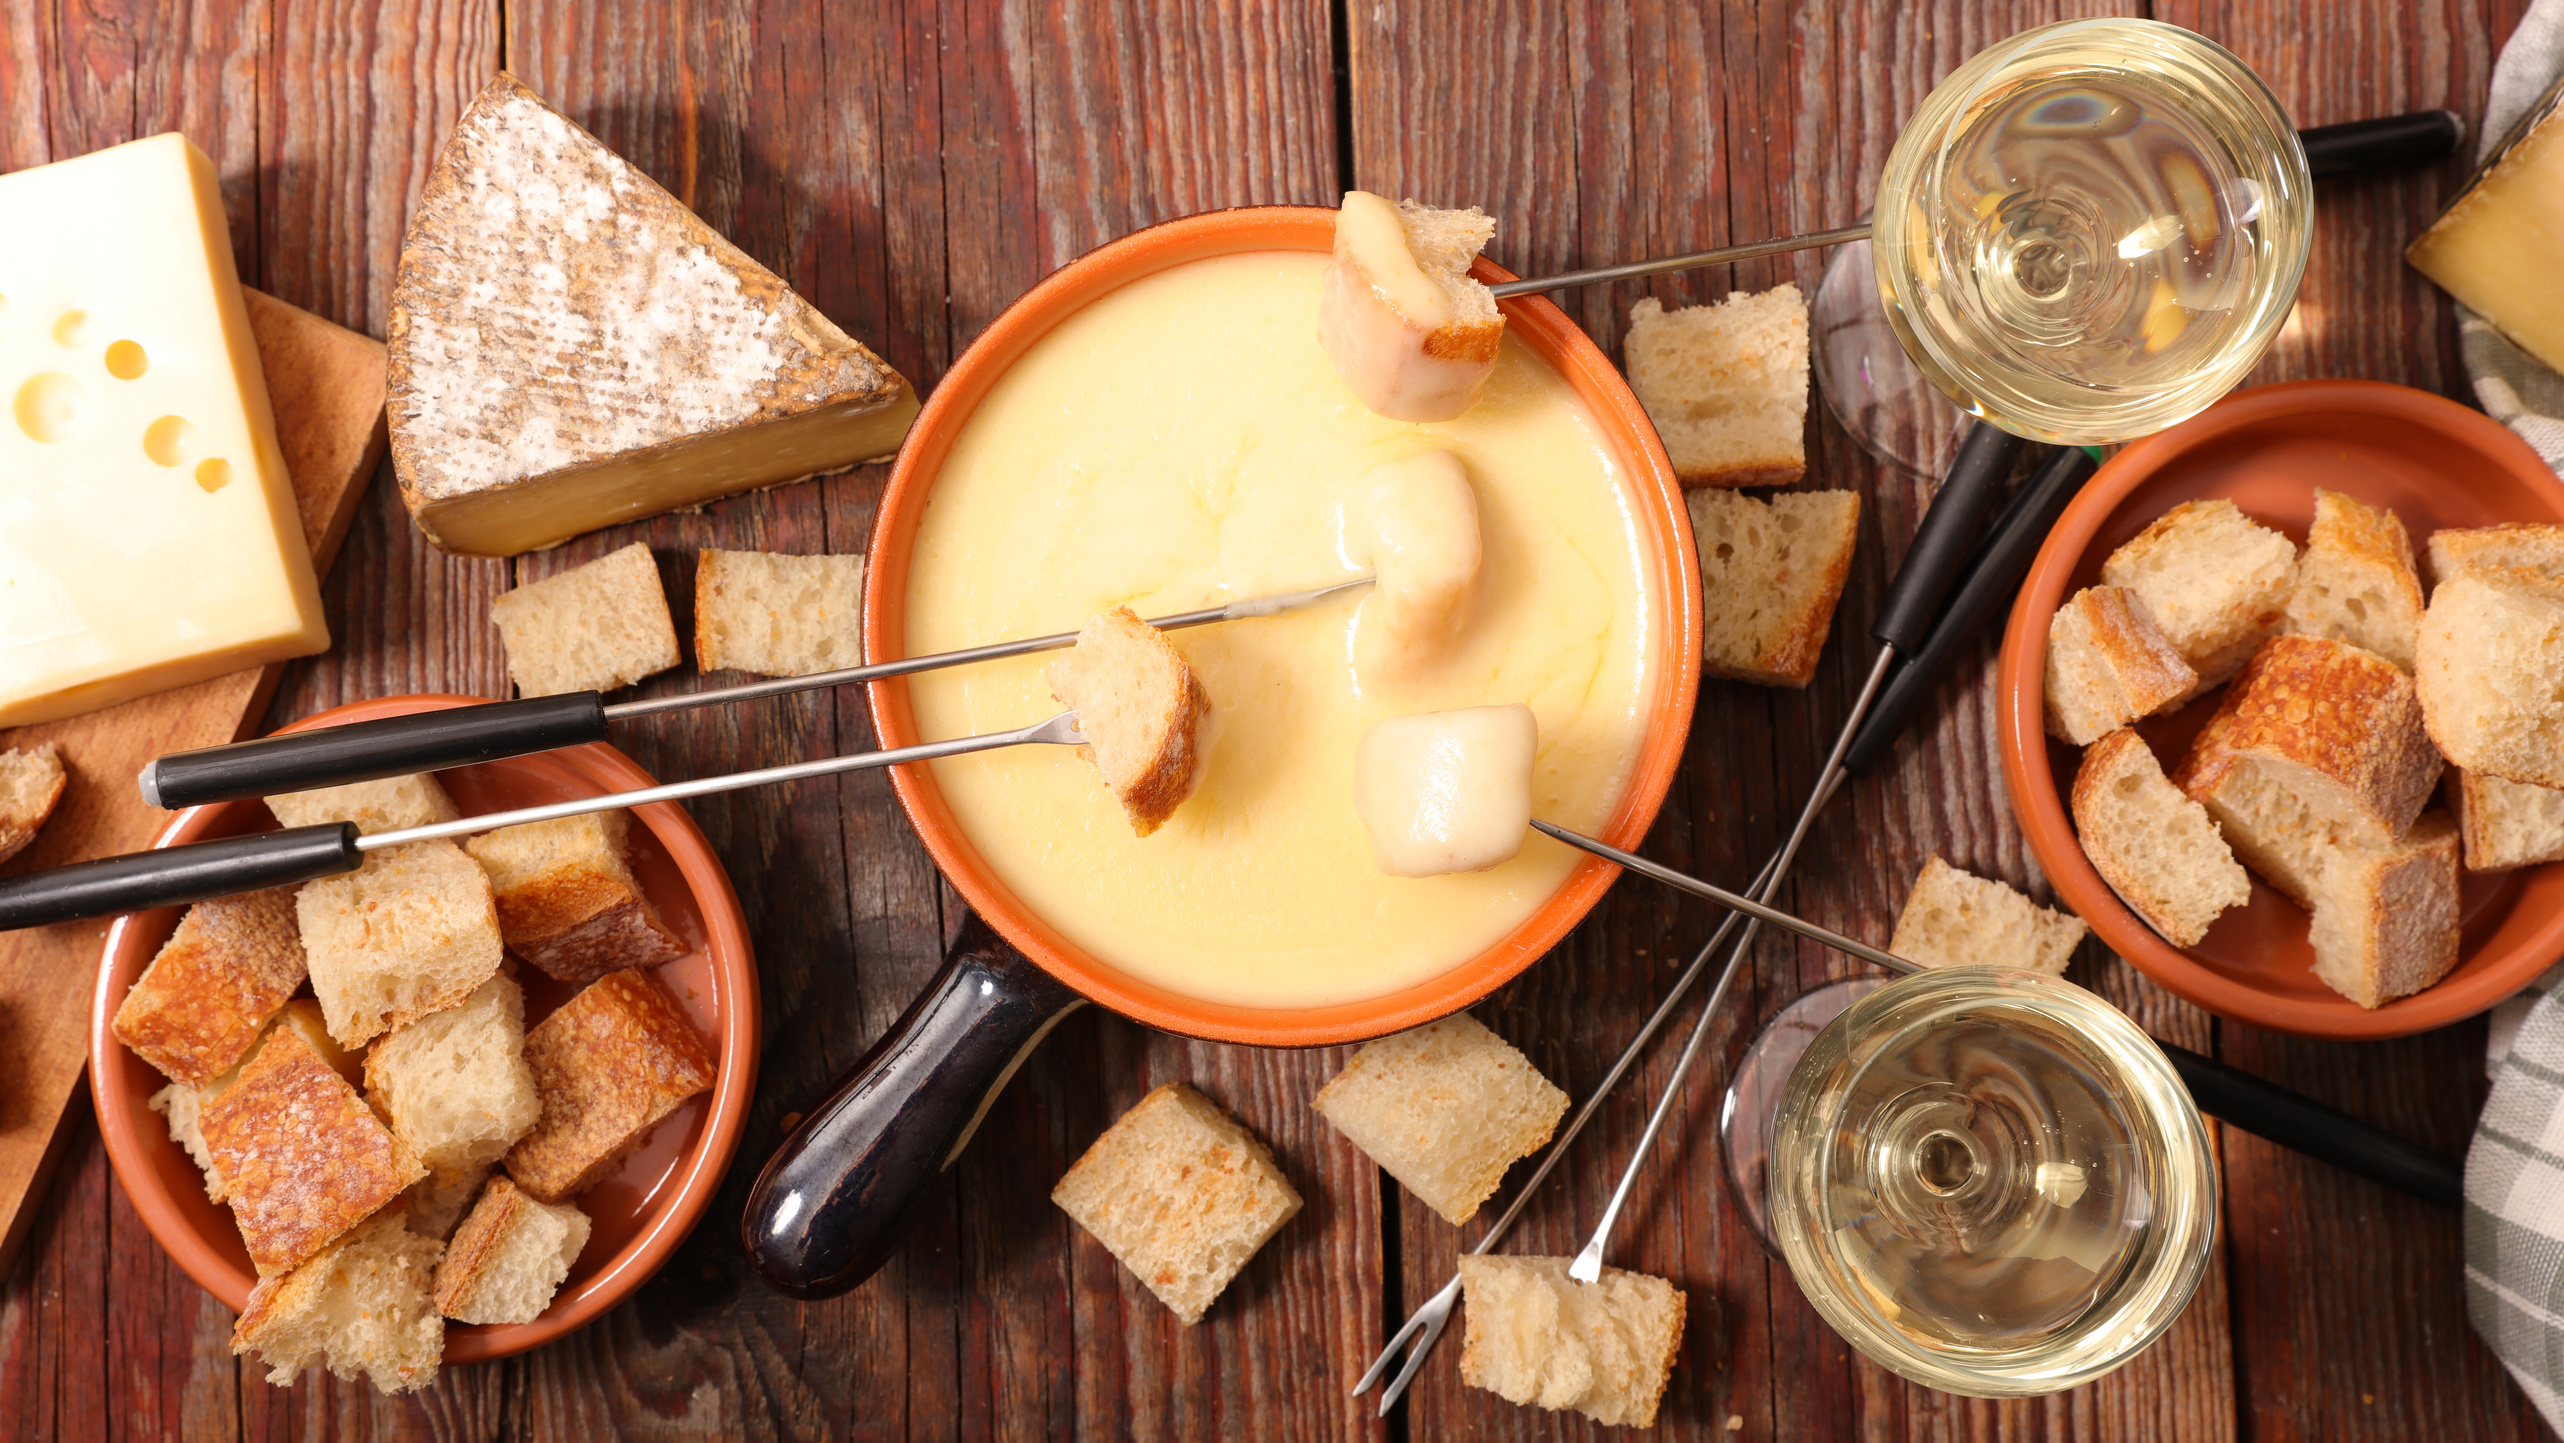 Cheese dinner &bdquo;Zermatt style&ldquo; <br>
for two